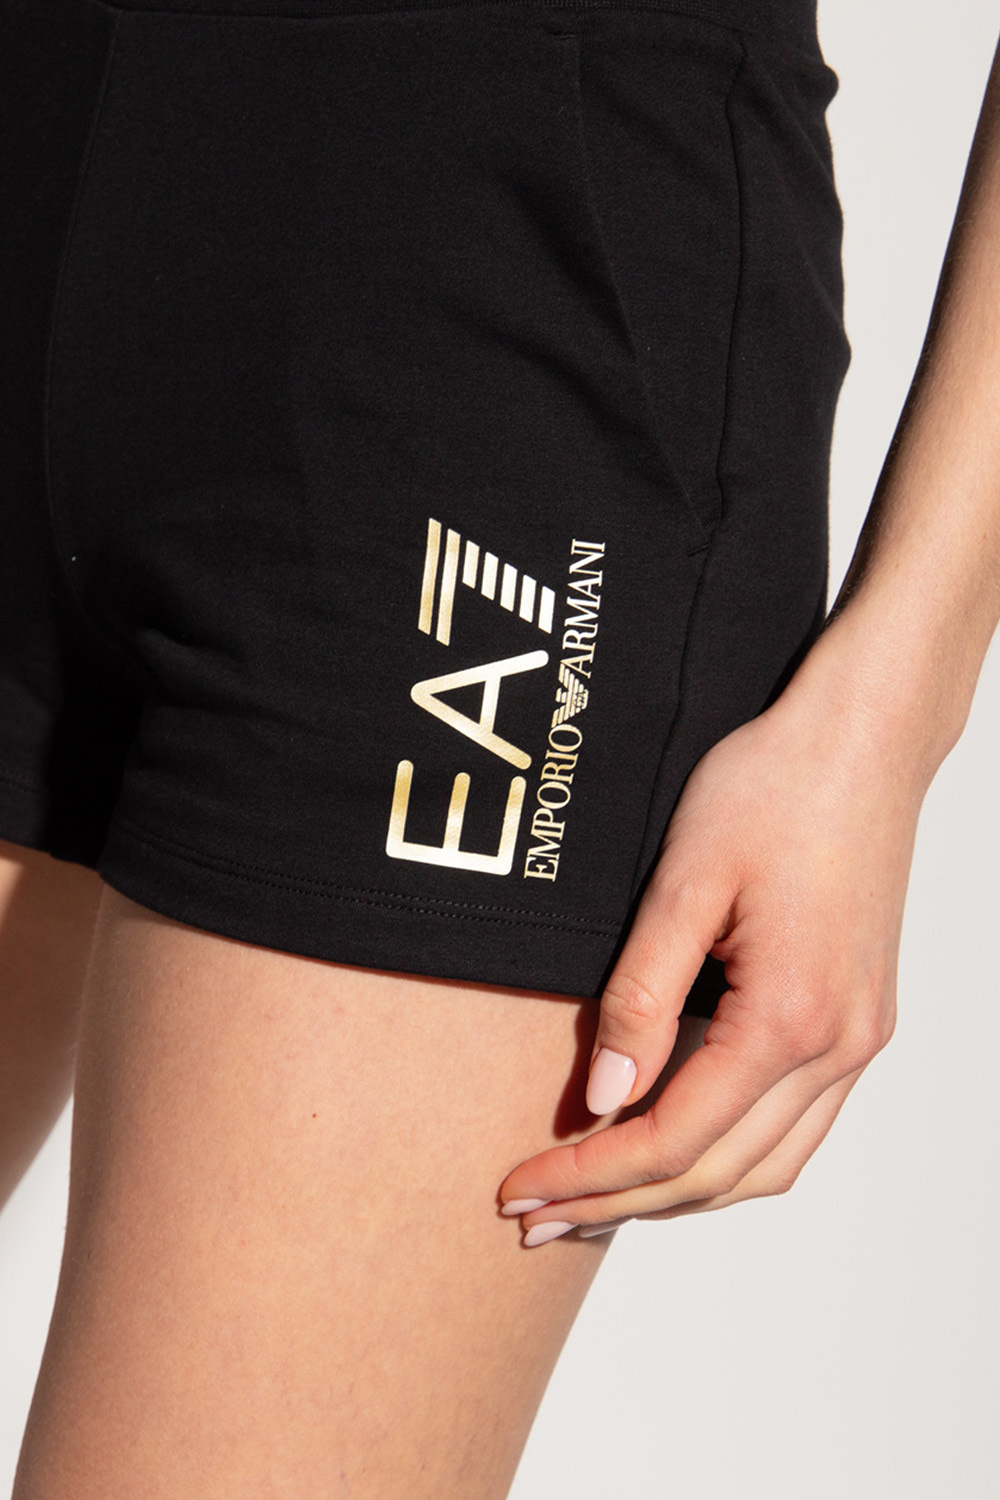 EA7 Emporio Armani Sports shorts with logo